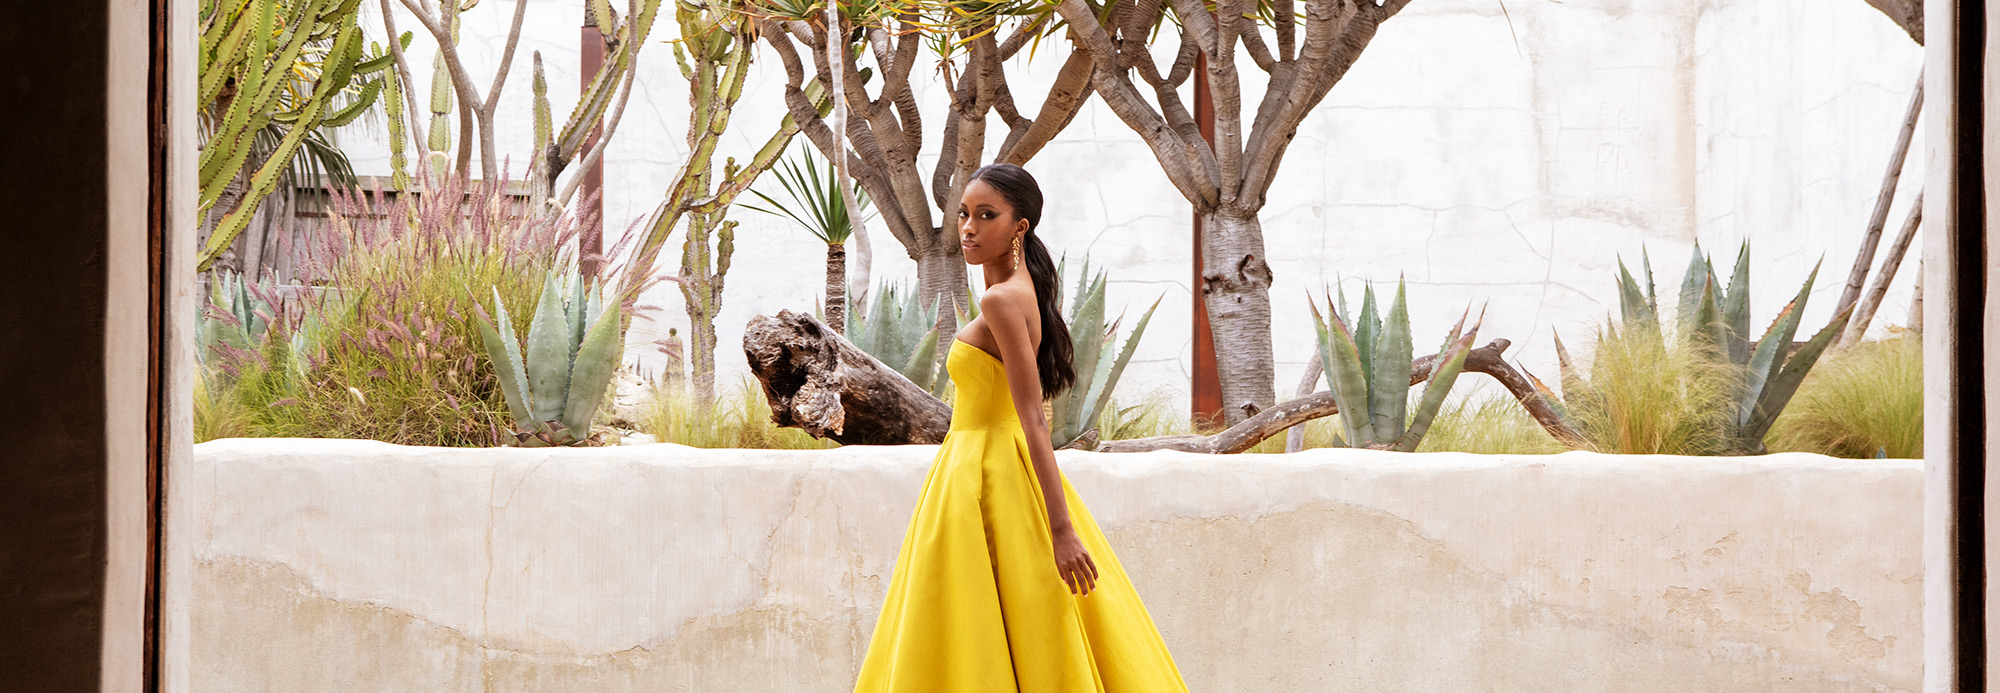 Female model wearing a yellow dress standing in front of desert plants